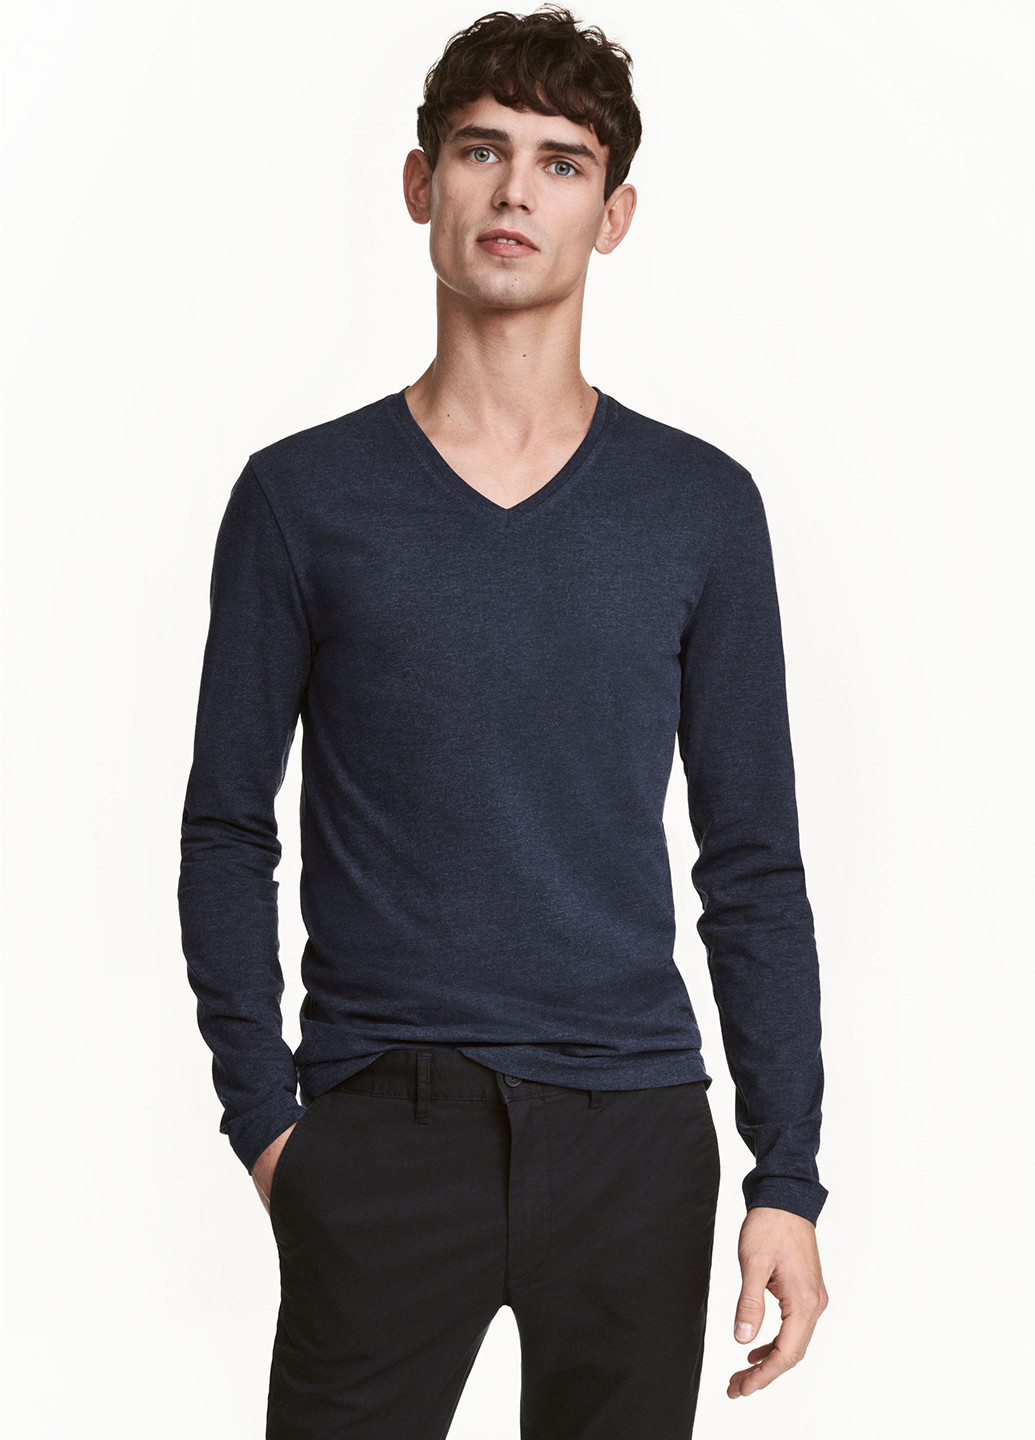 Темно-синий демисезонный пуловер пуловер H&M